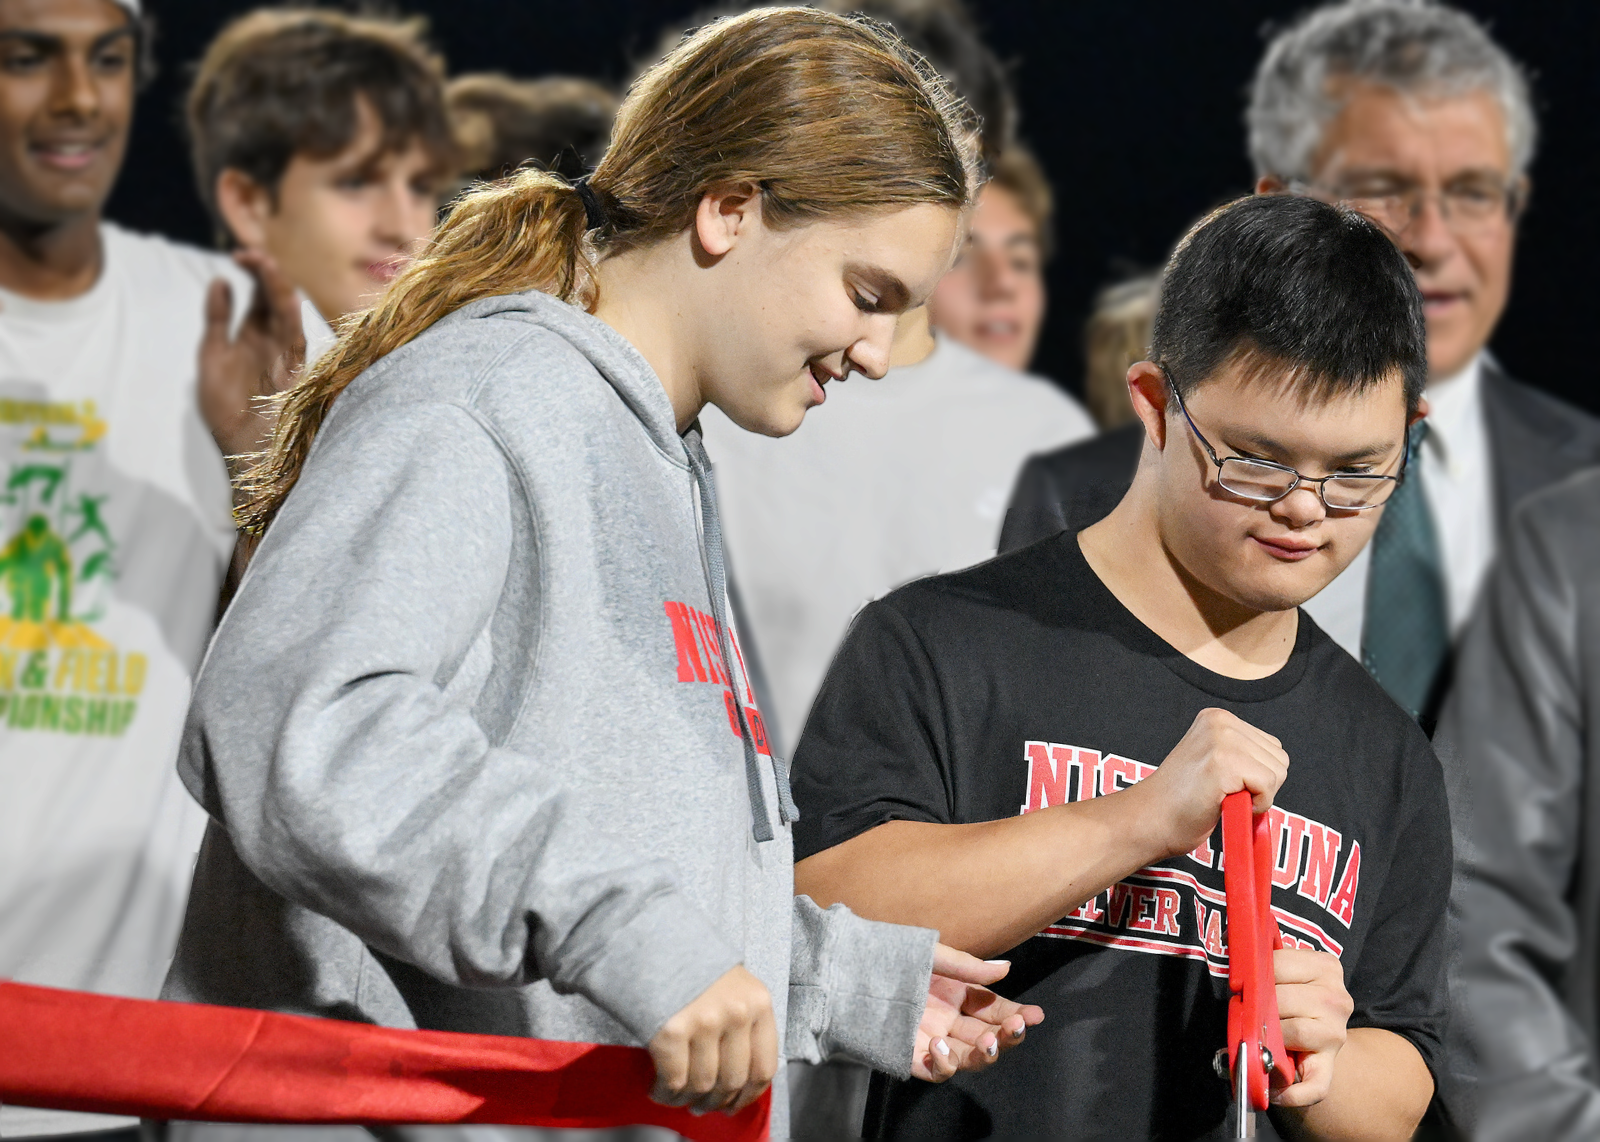 student athletes cutting ribbon on field